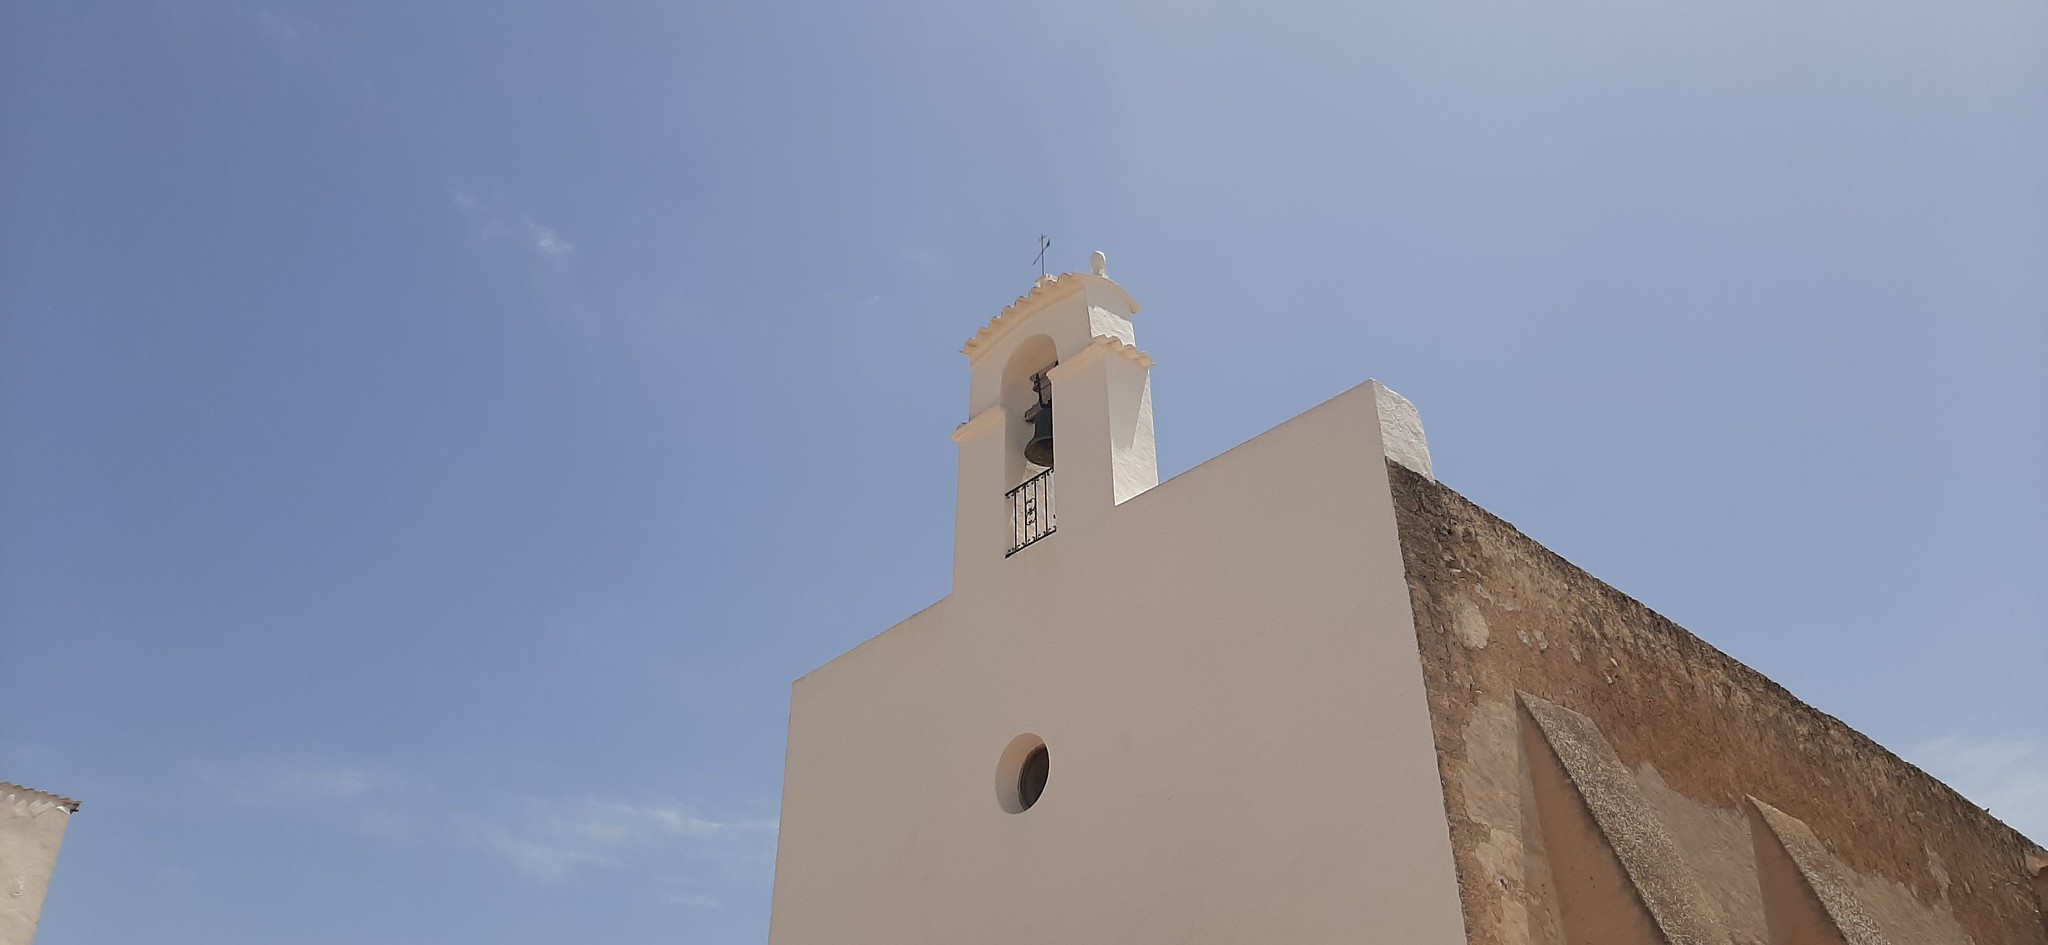 Sant Agustín des Vedrà, Ibiza, 26 de mayo 2021